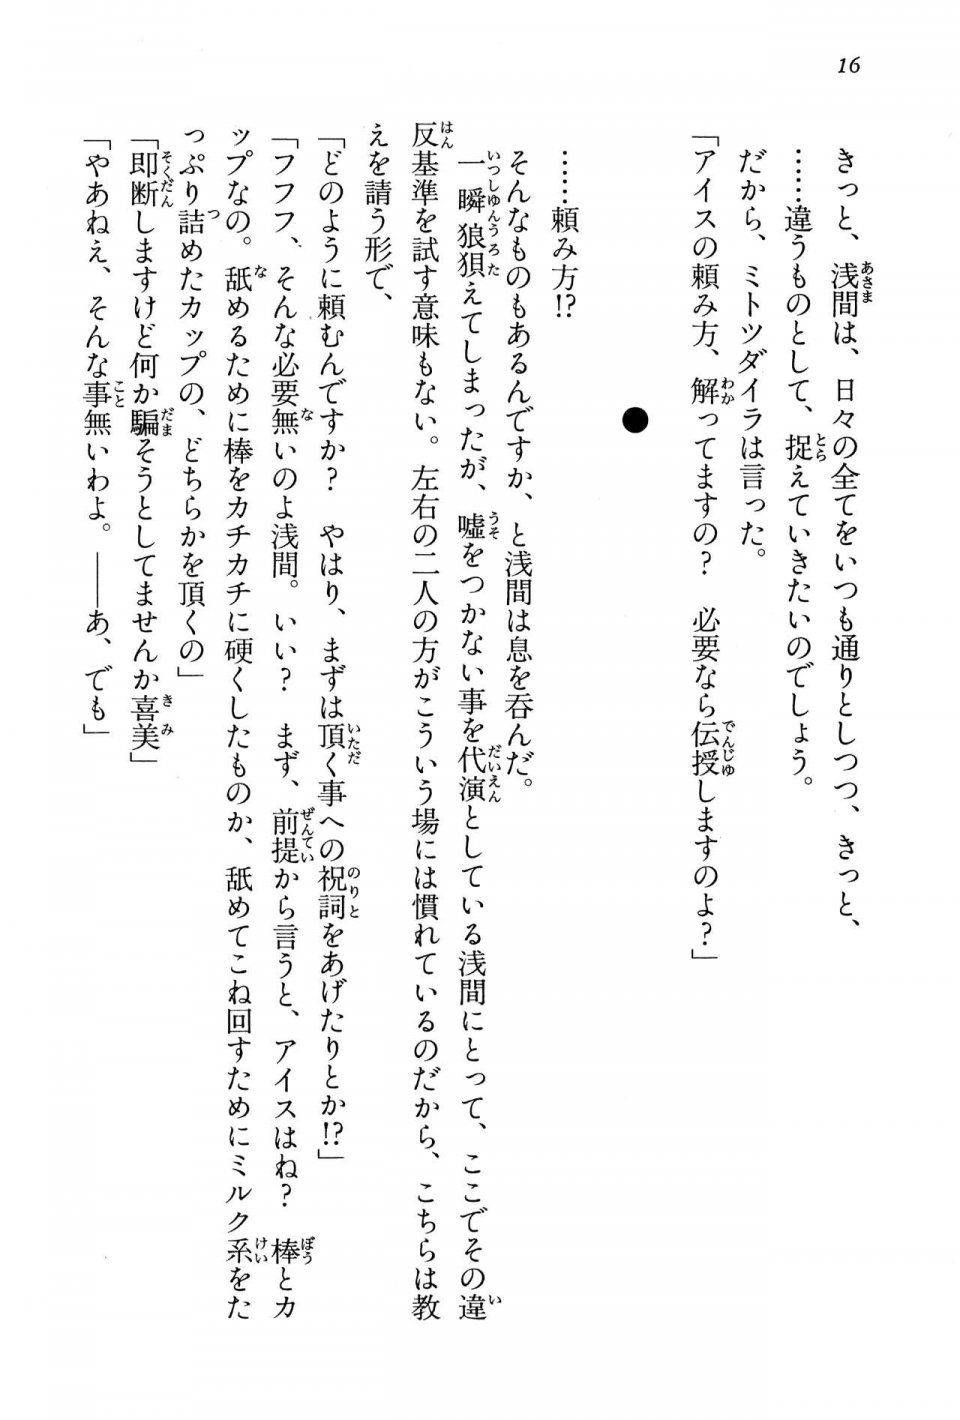 Kyoukai Senjou no Horizon BD Special Mininovel Vol 3(2A) - Photo #20